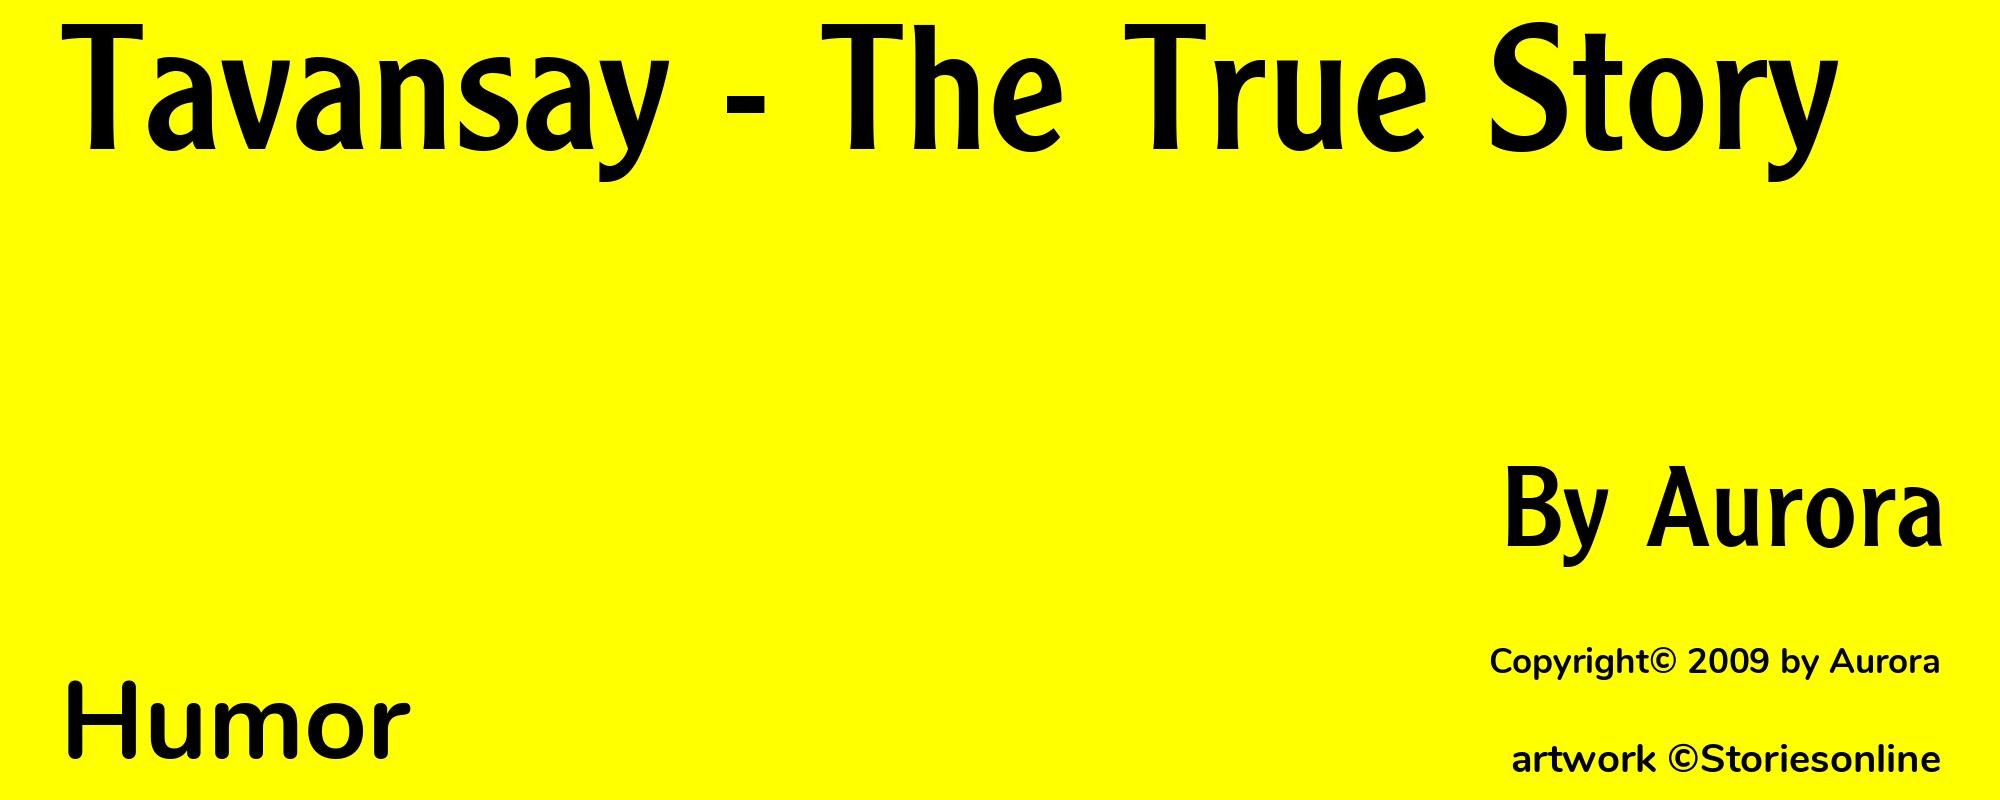 Tavansay - The True Story - Cover